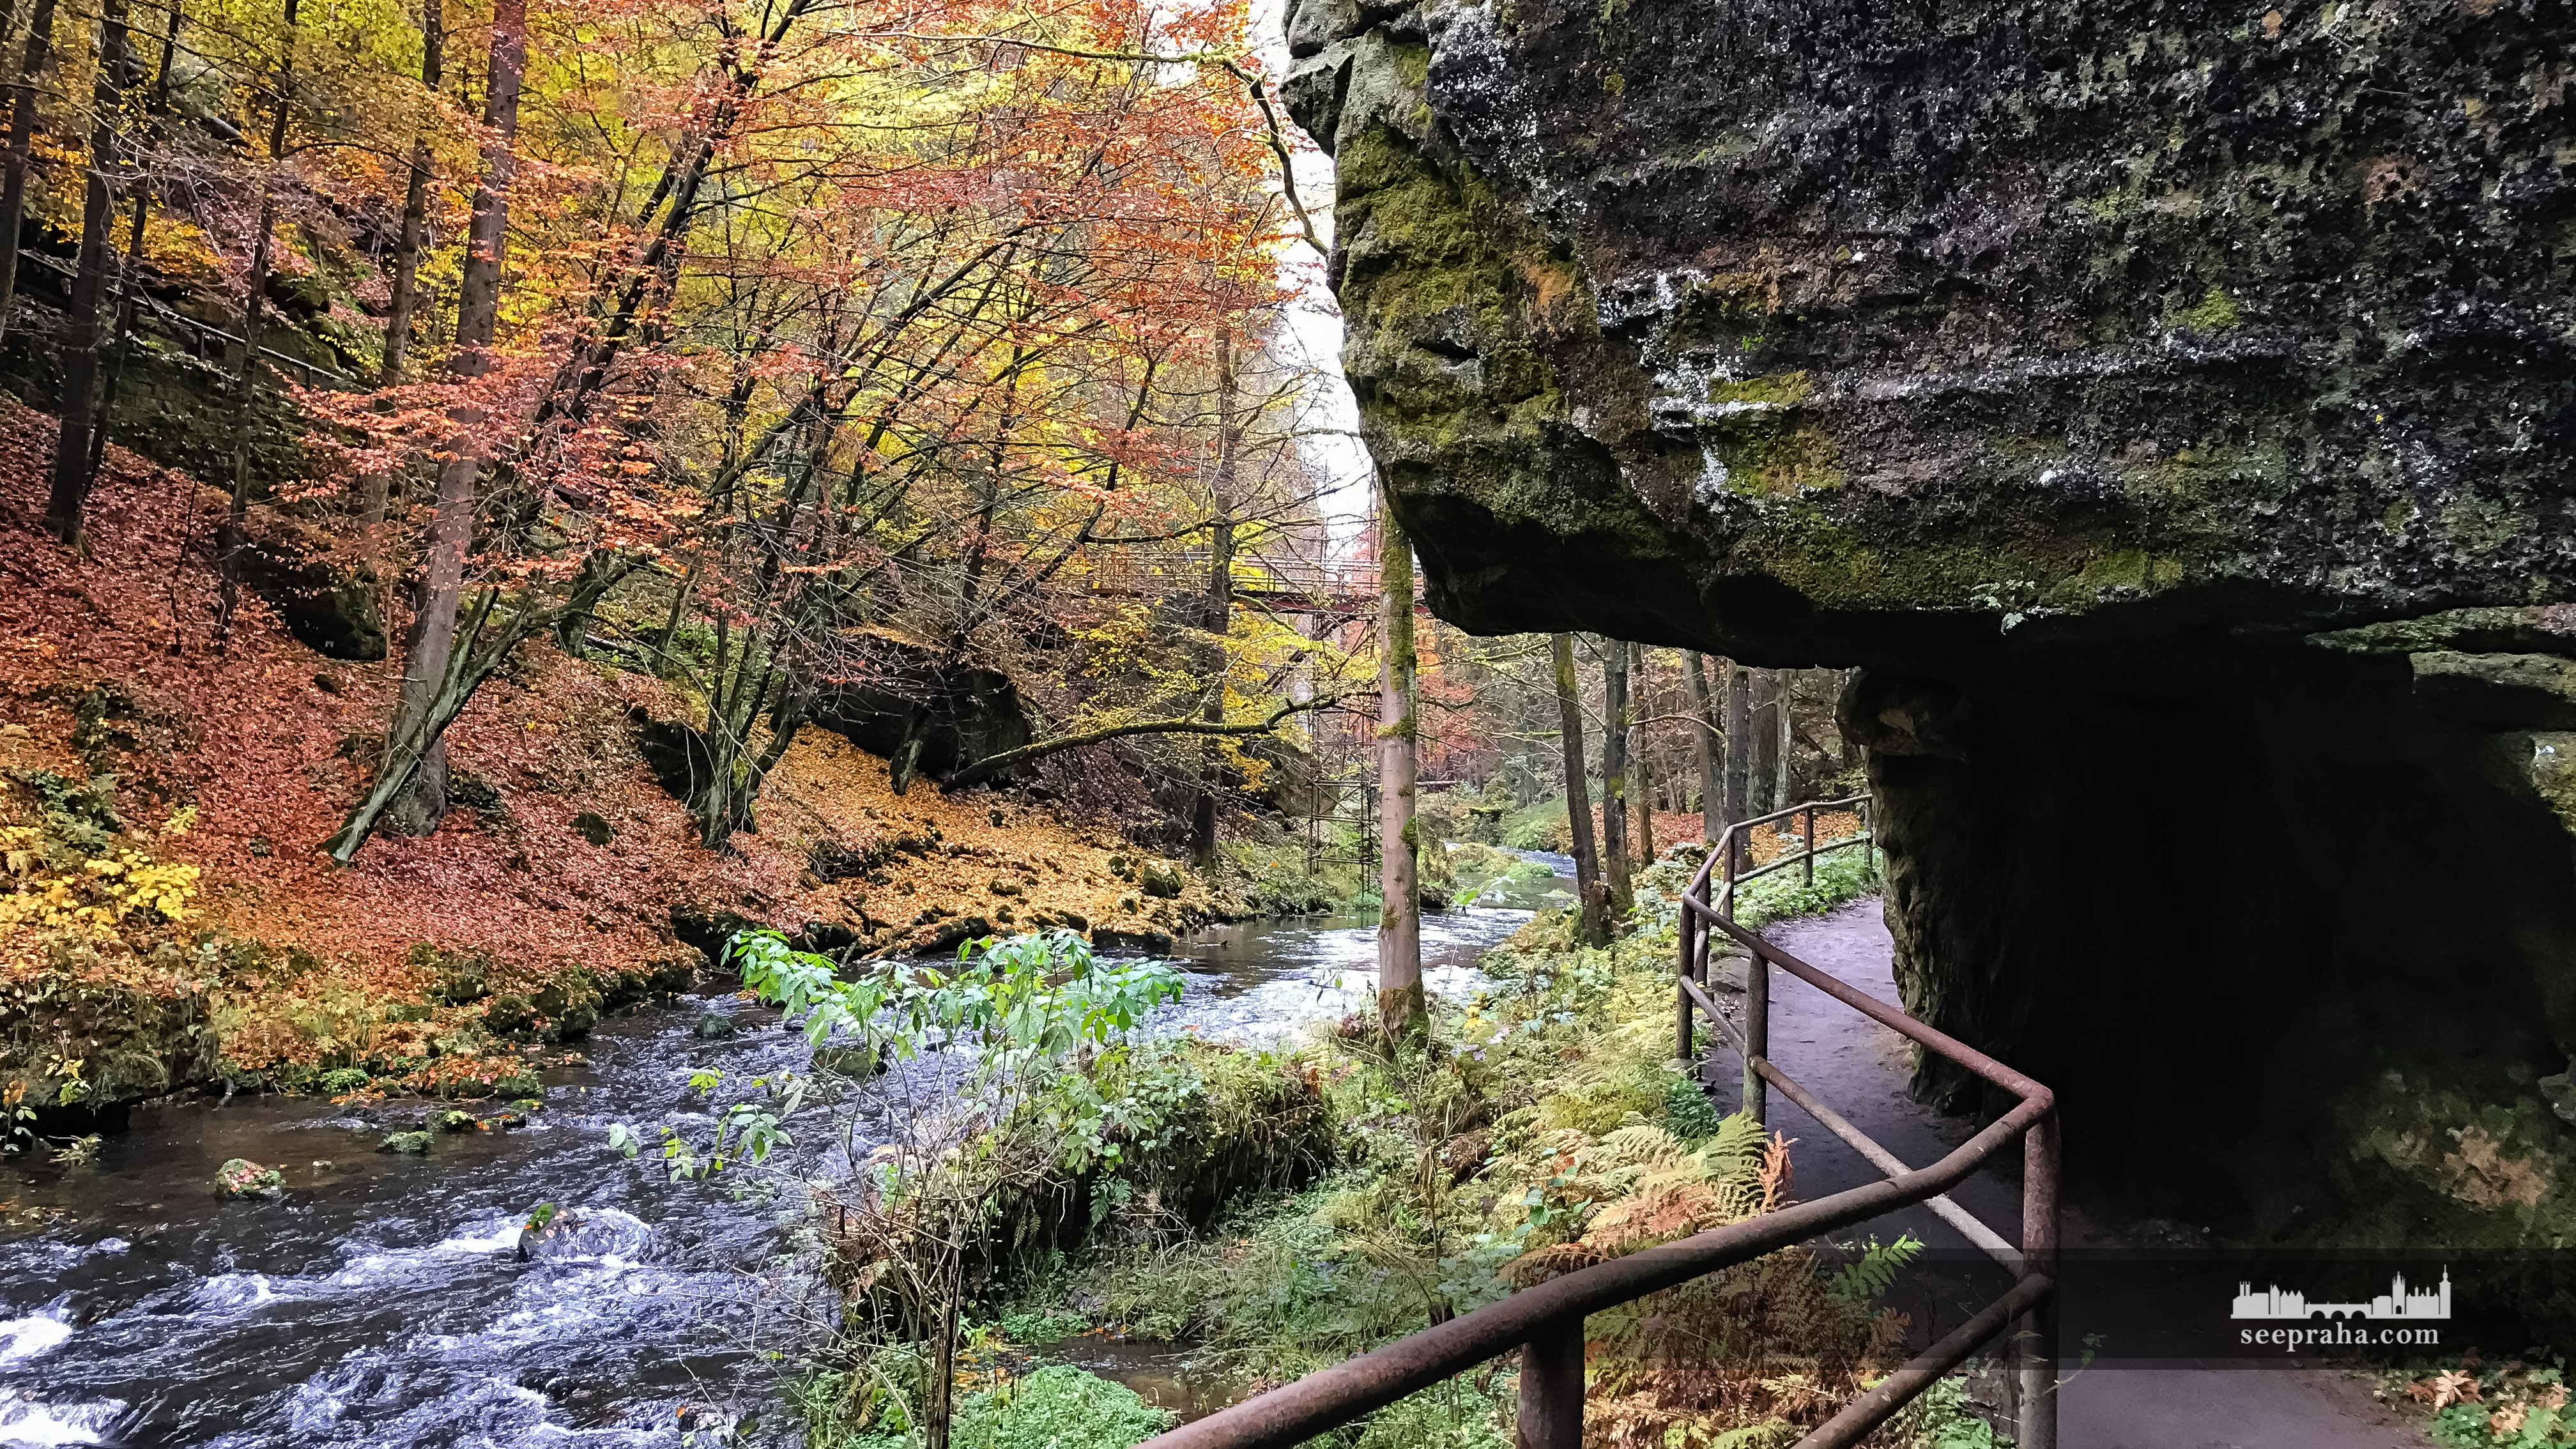 Ущелина Едмунда і річка Кам'яниця, Парк Чеська Швейцарія, Чехія